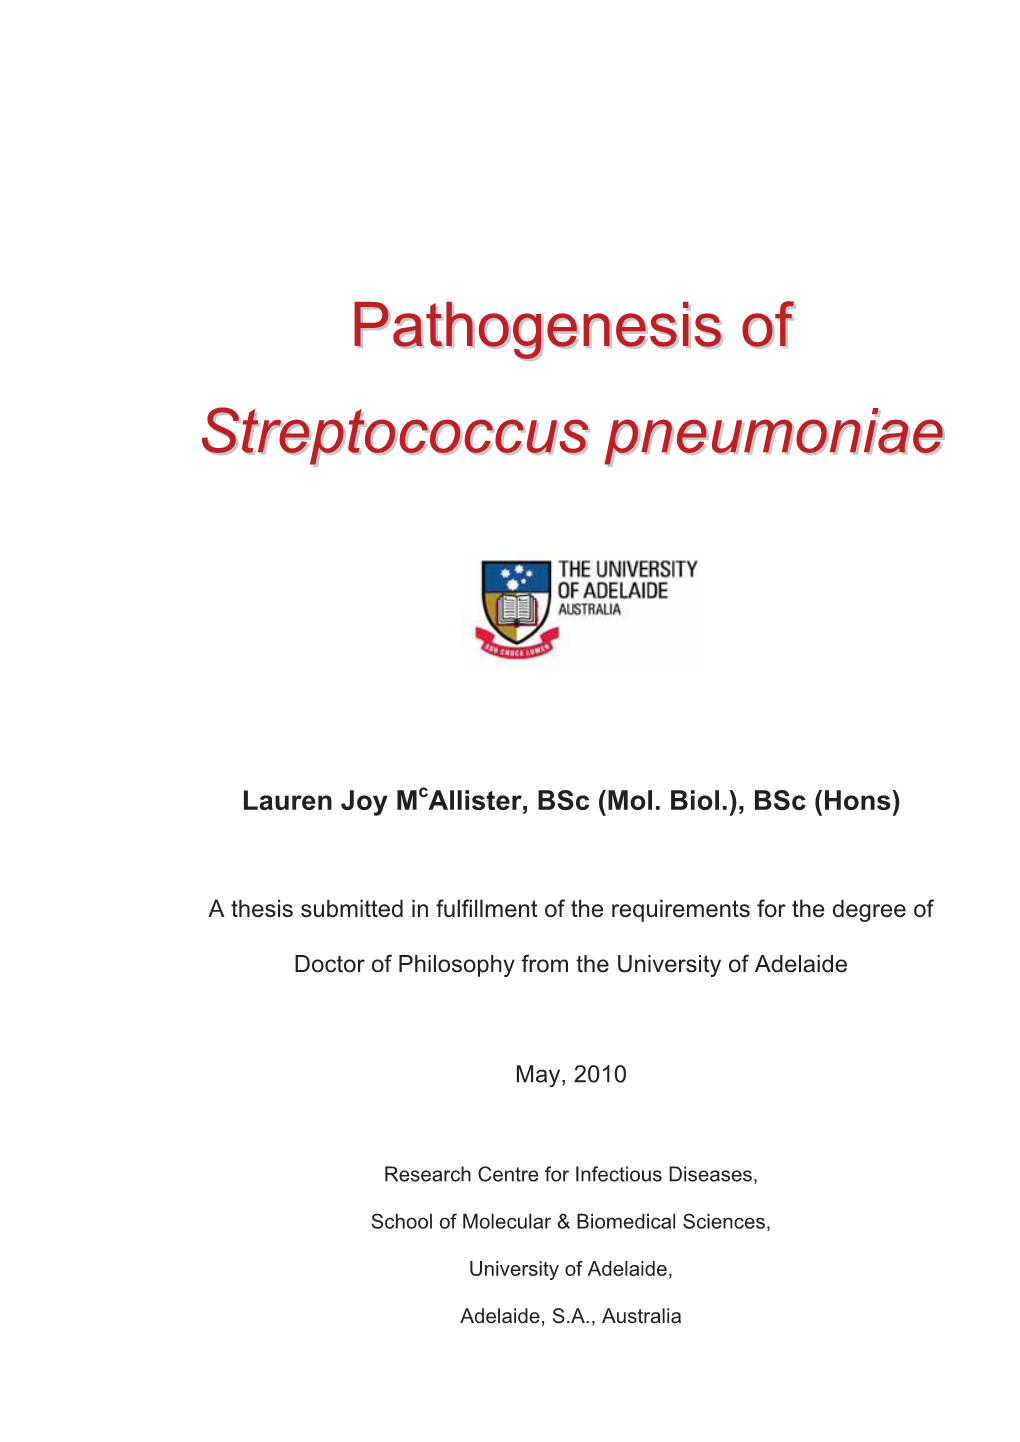 Pathogenesis of Streptococcus Pneumoniae